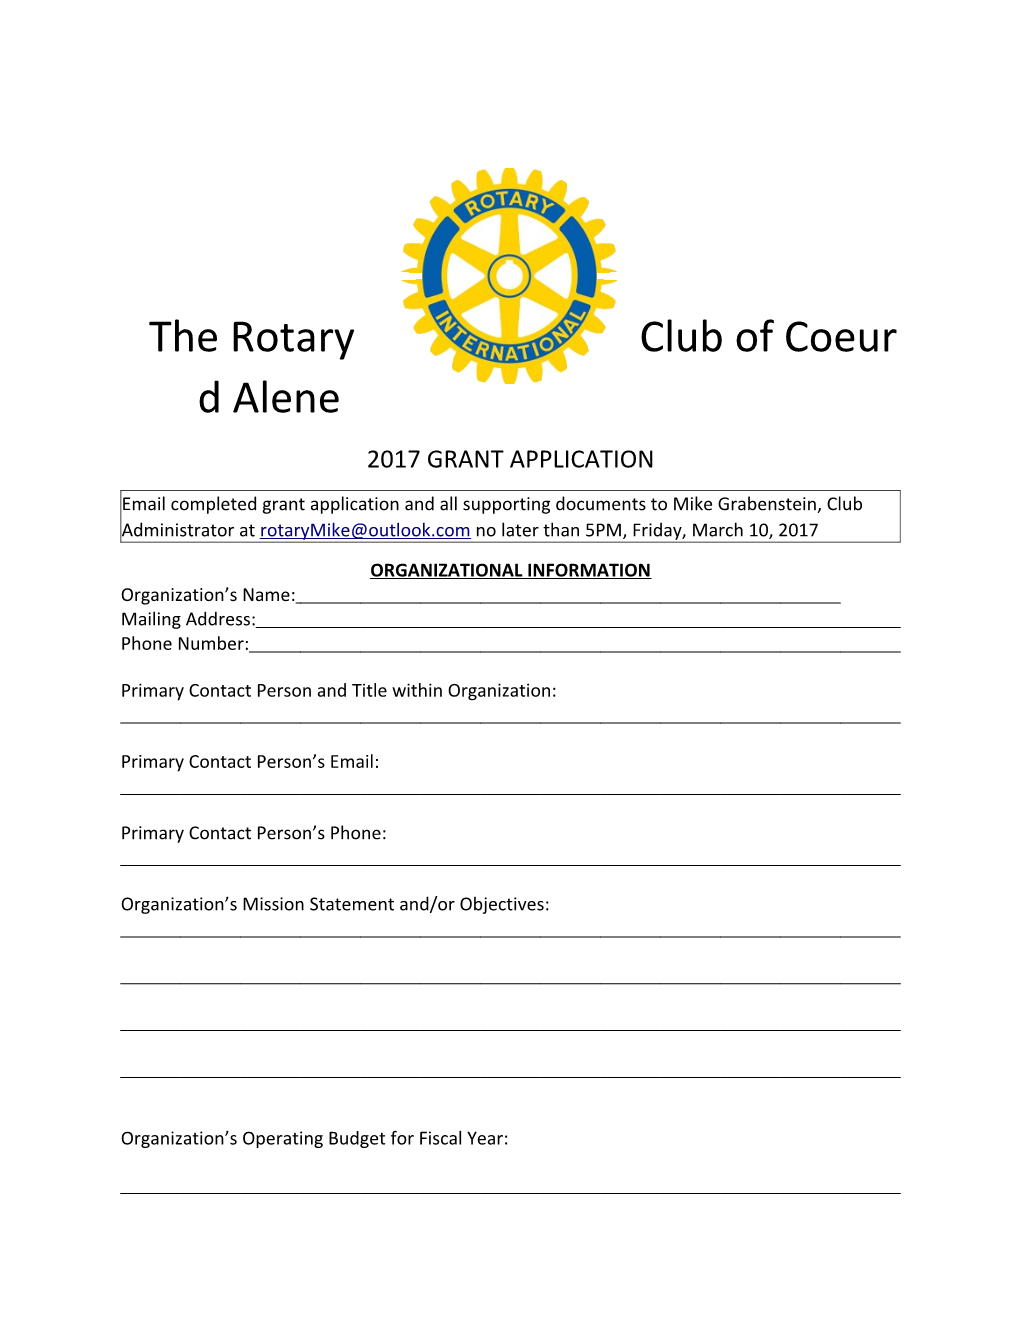 The Rotary Club of Coeur D Alene